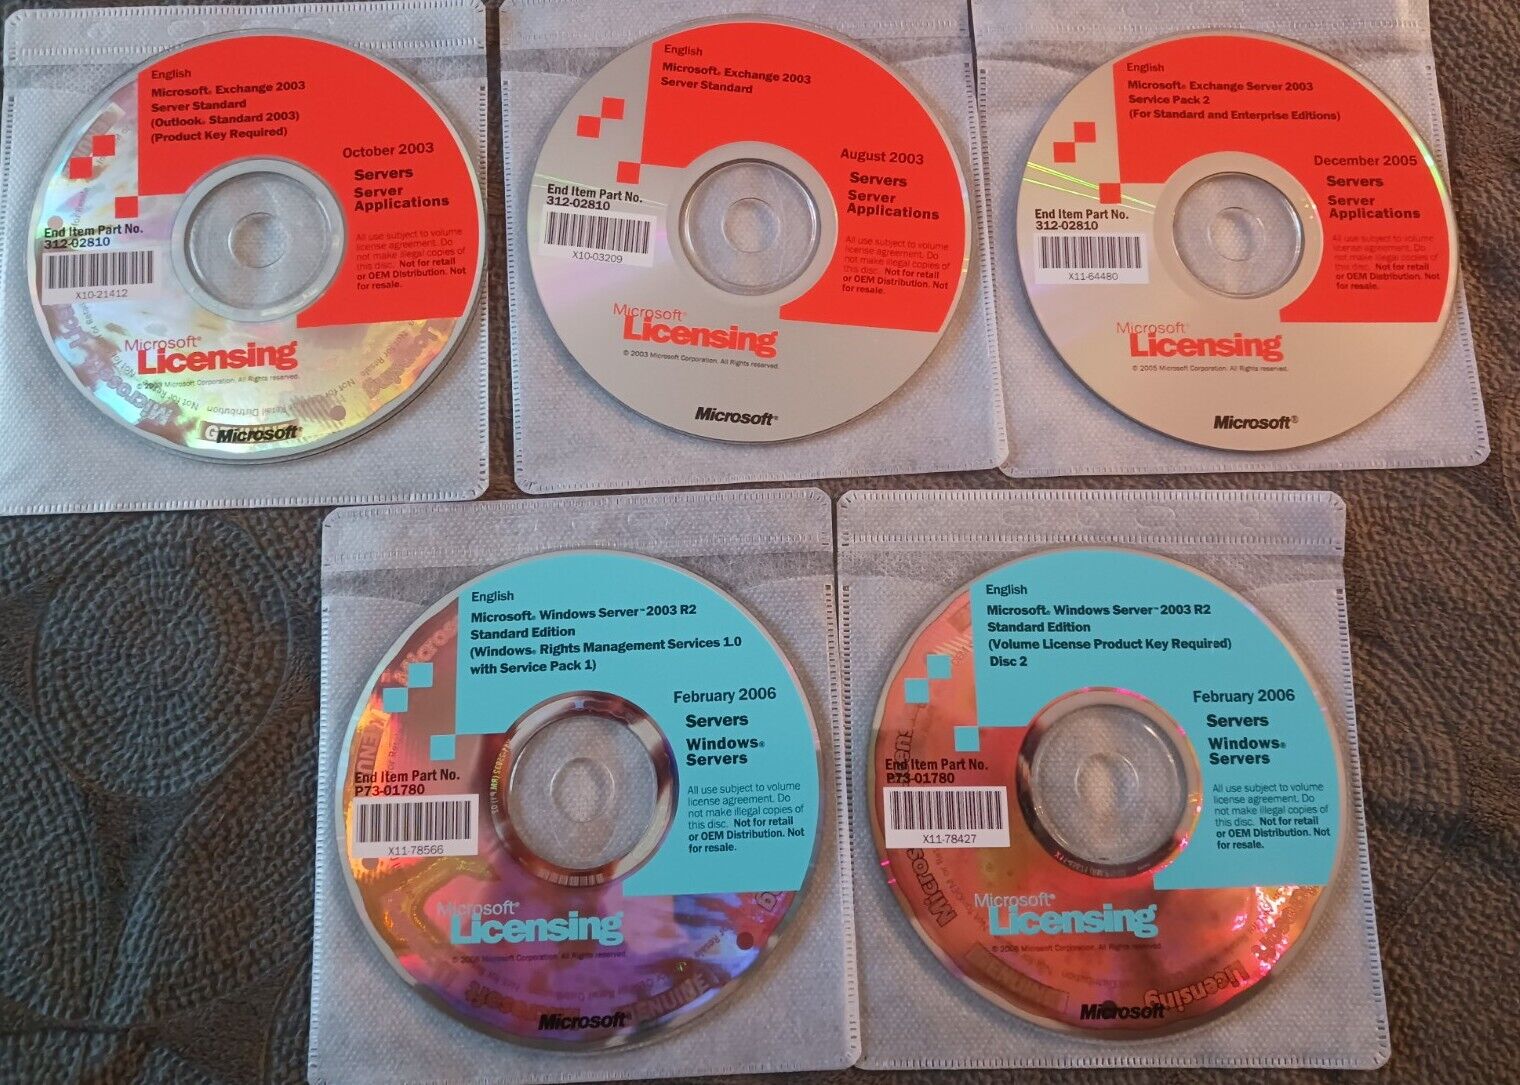 '5' Microsoft Licensing Servers/Server Applications Discs - VTG Software 2003/05